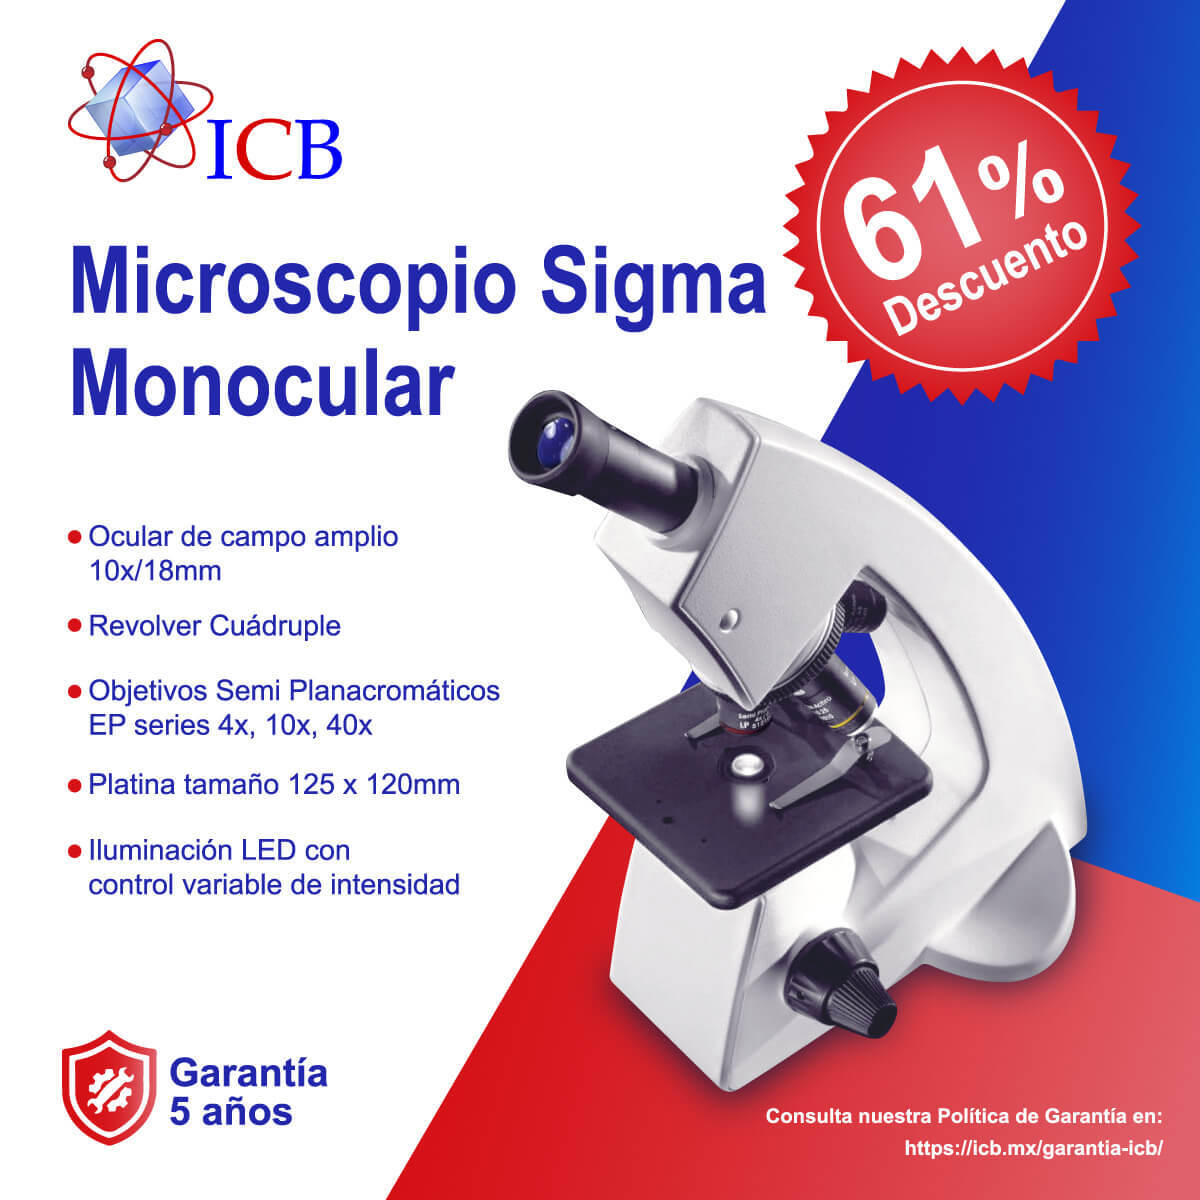 Microscopio Monocular ICB